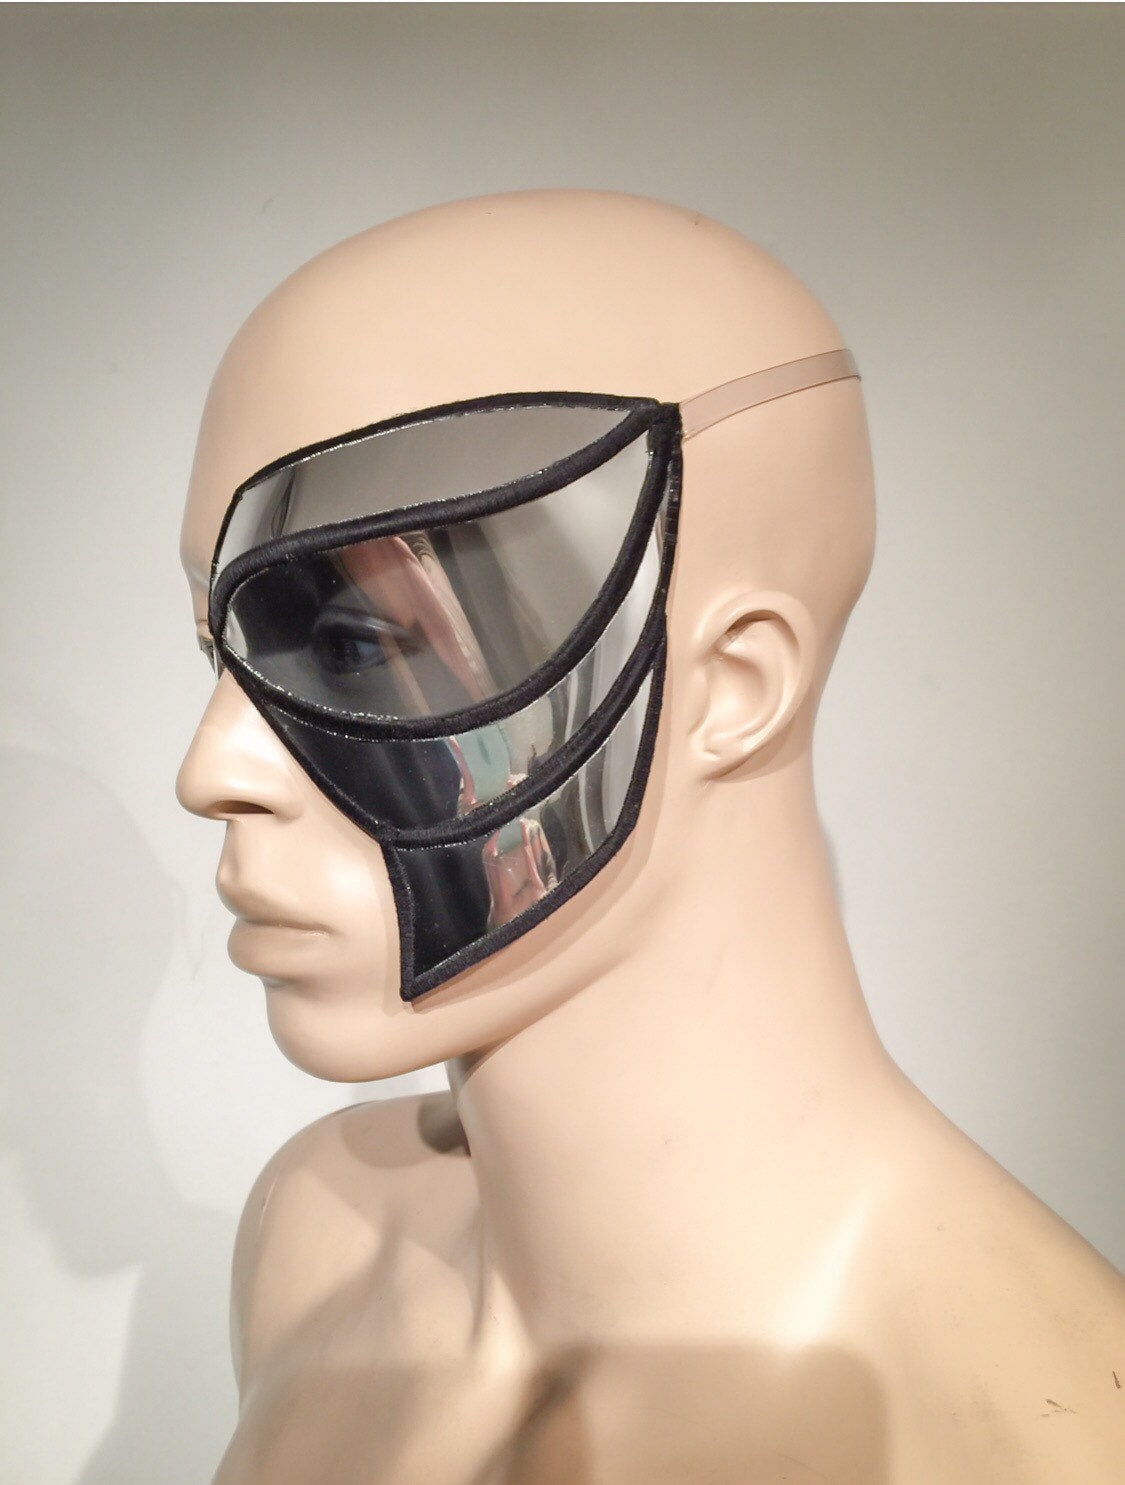 CYBORG LED light up Fashion Glasses – RchBtch3000